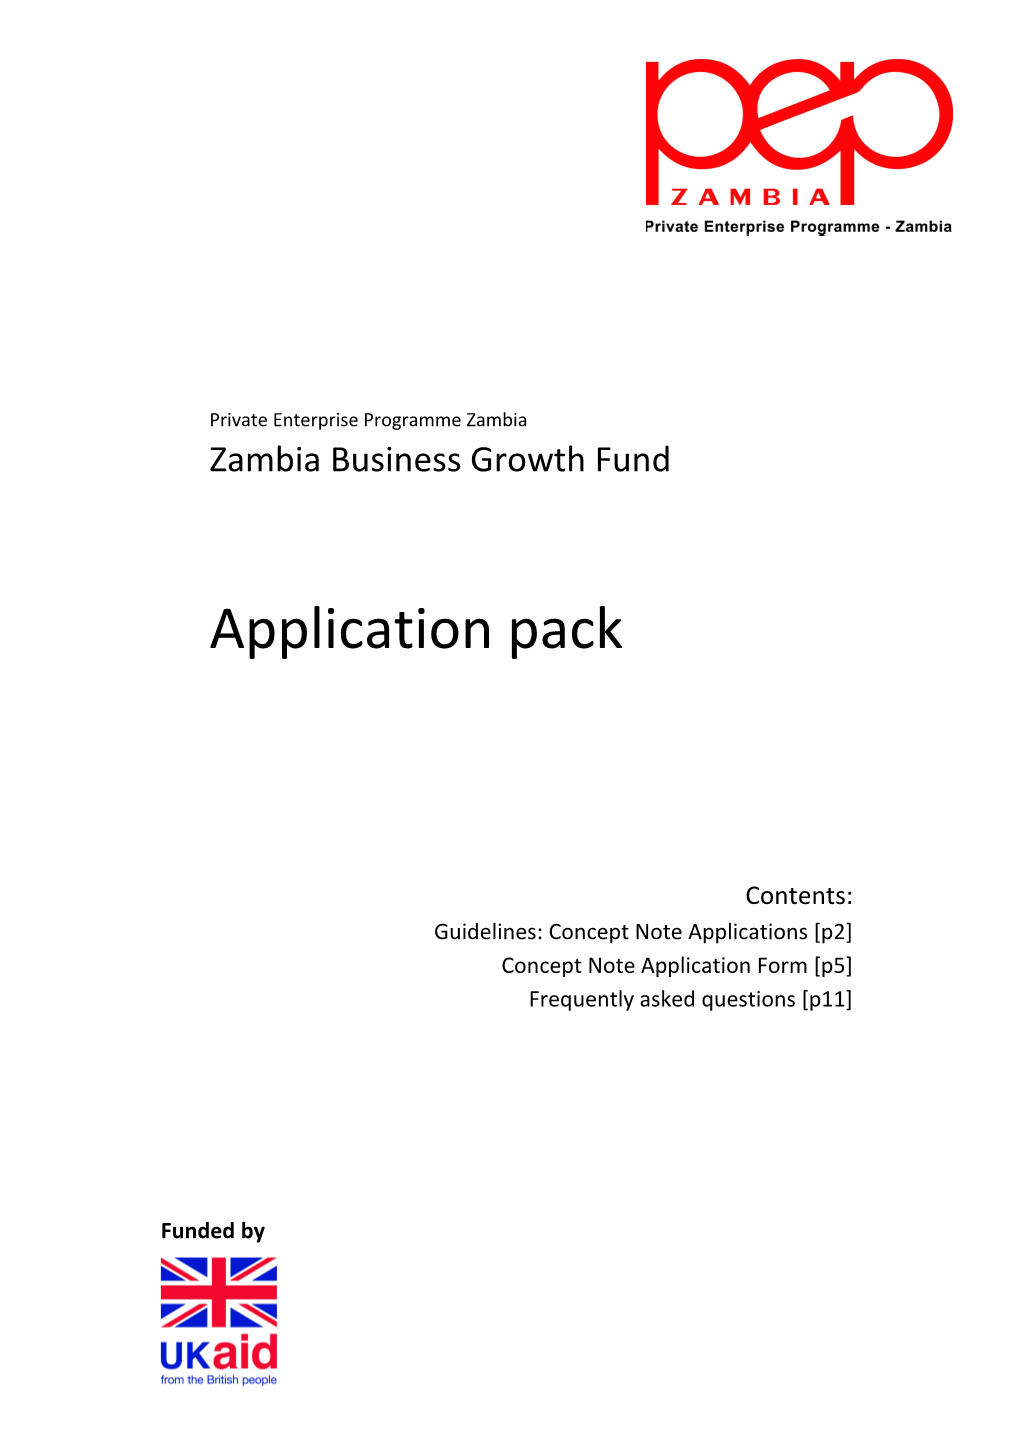 Private Enterprise Programme Zambia